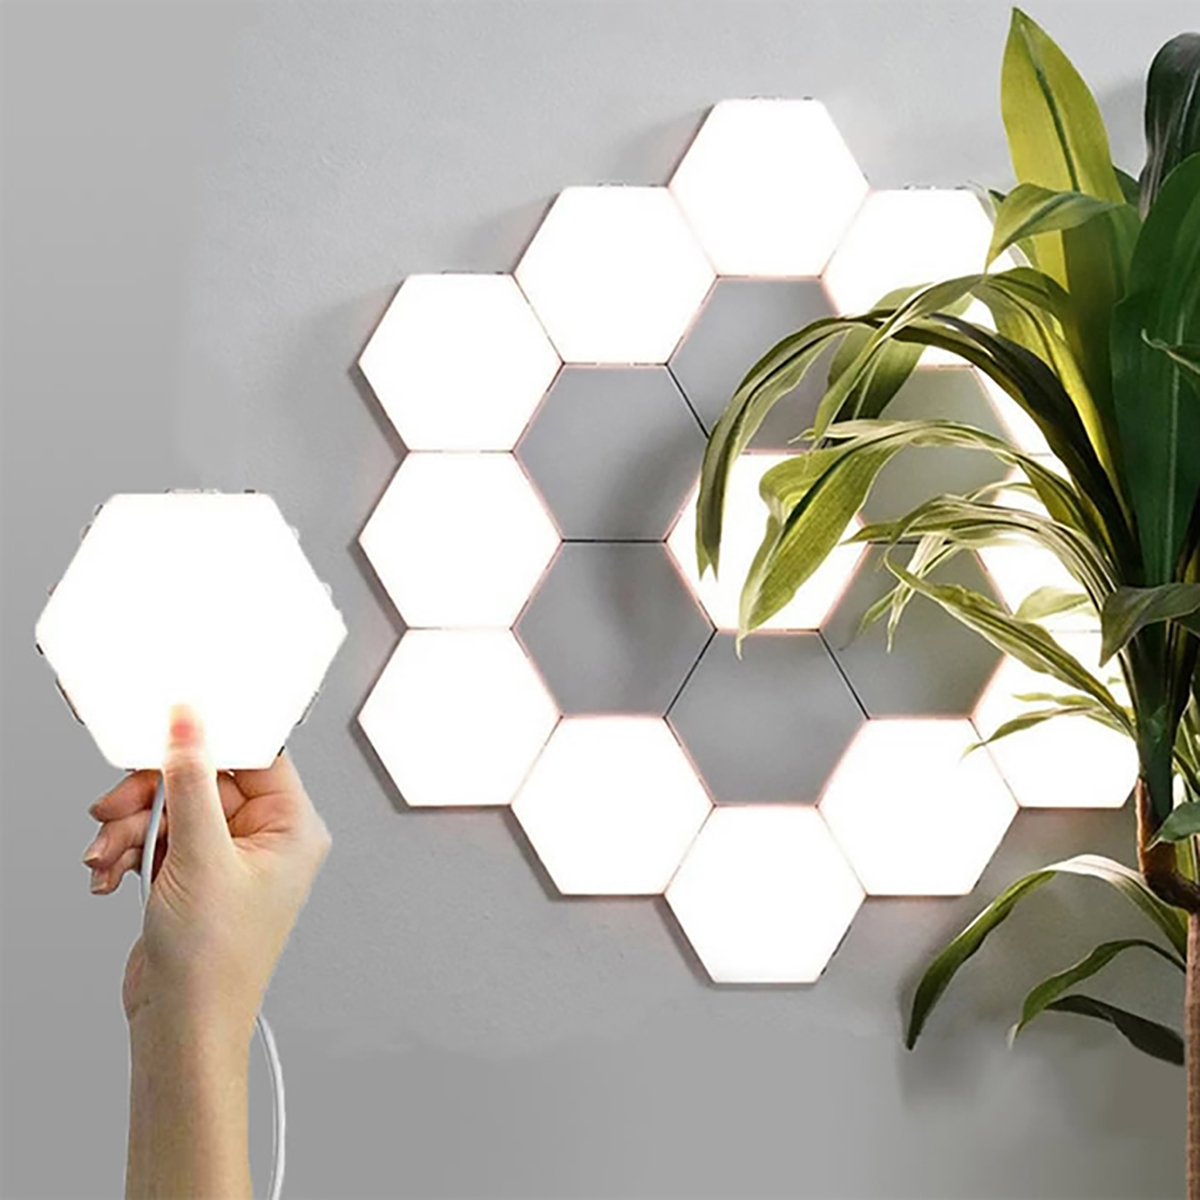 4x-Modular-LED-Touch-Wall-Lamp-Hexagonal-Honeycomb-Magnetic-Quantum-Night-Light-1789908-7